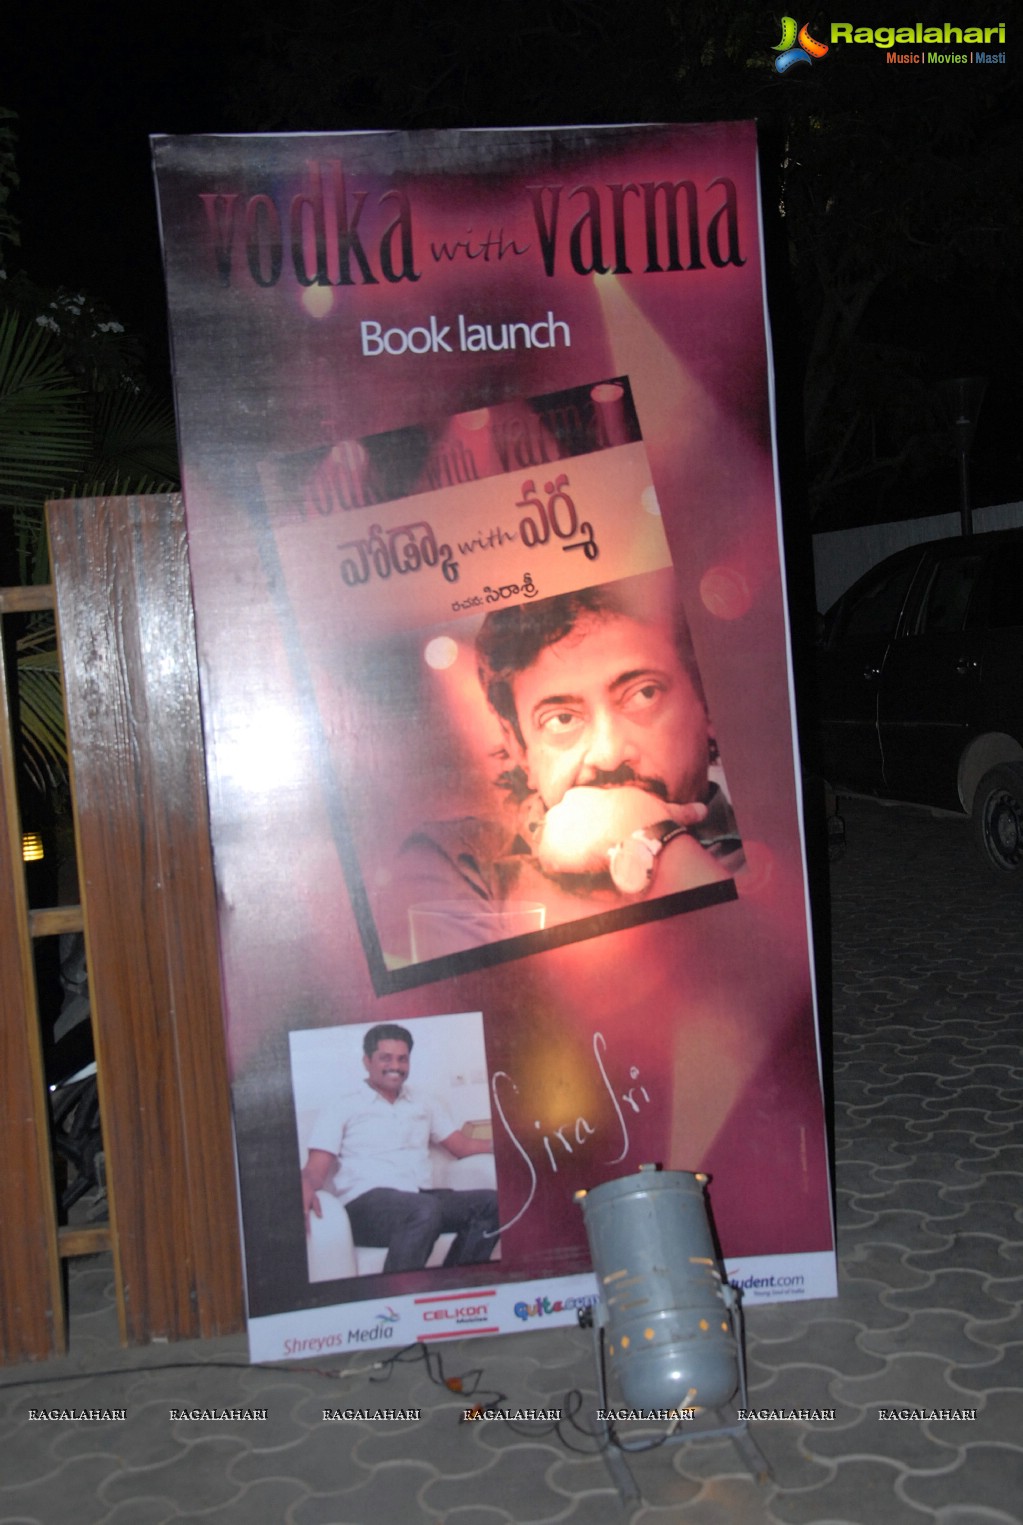 Vodka with Varma Book Launch, Hyderabad